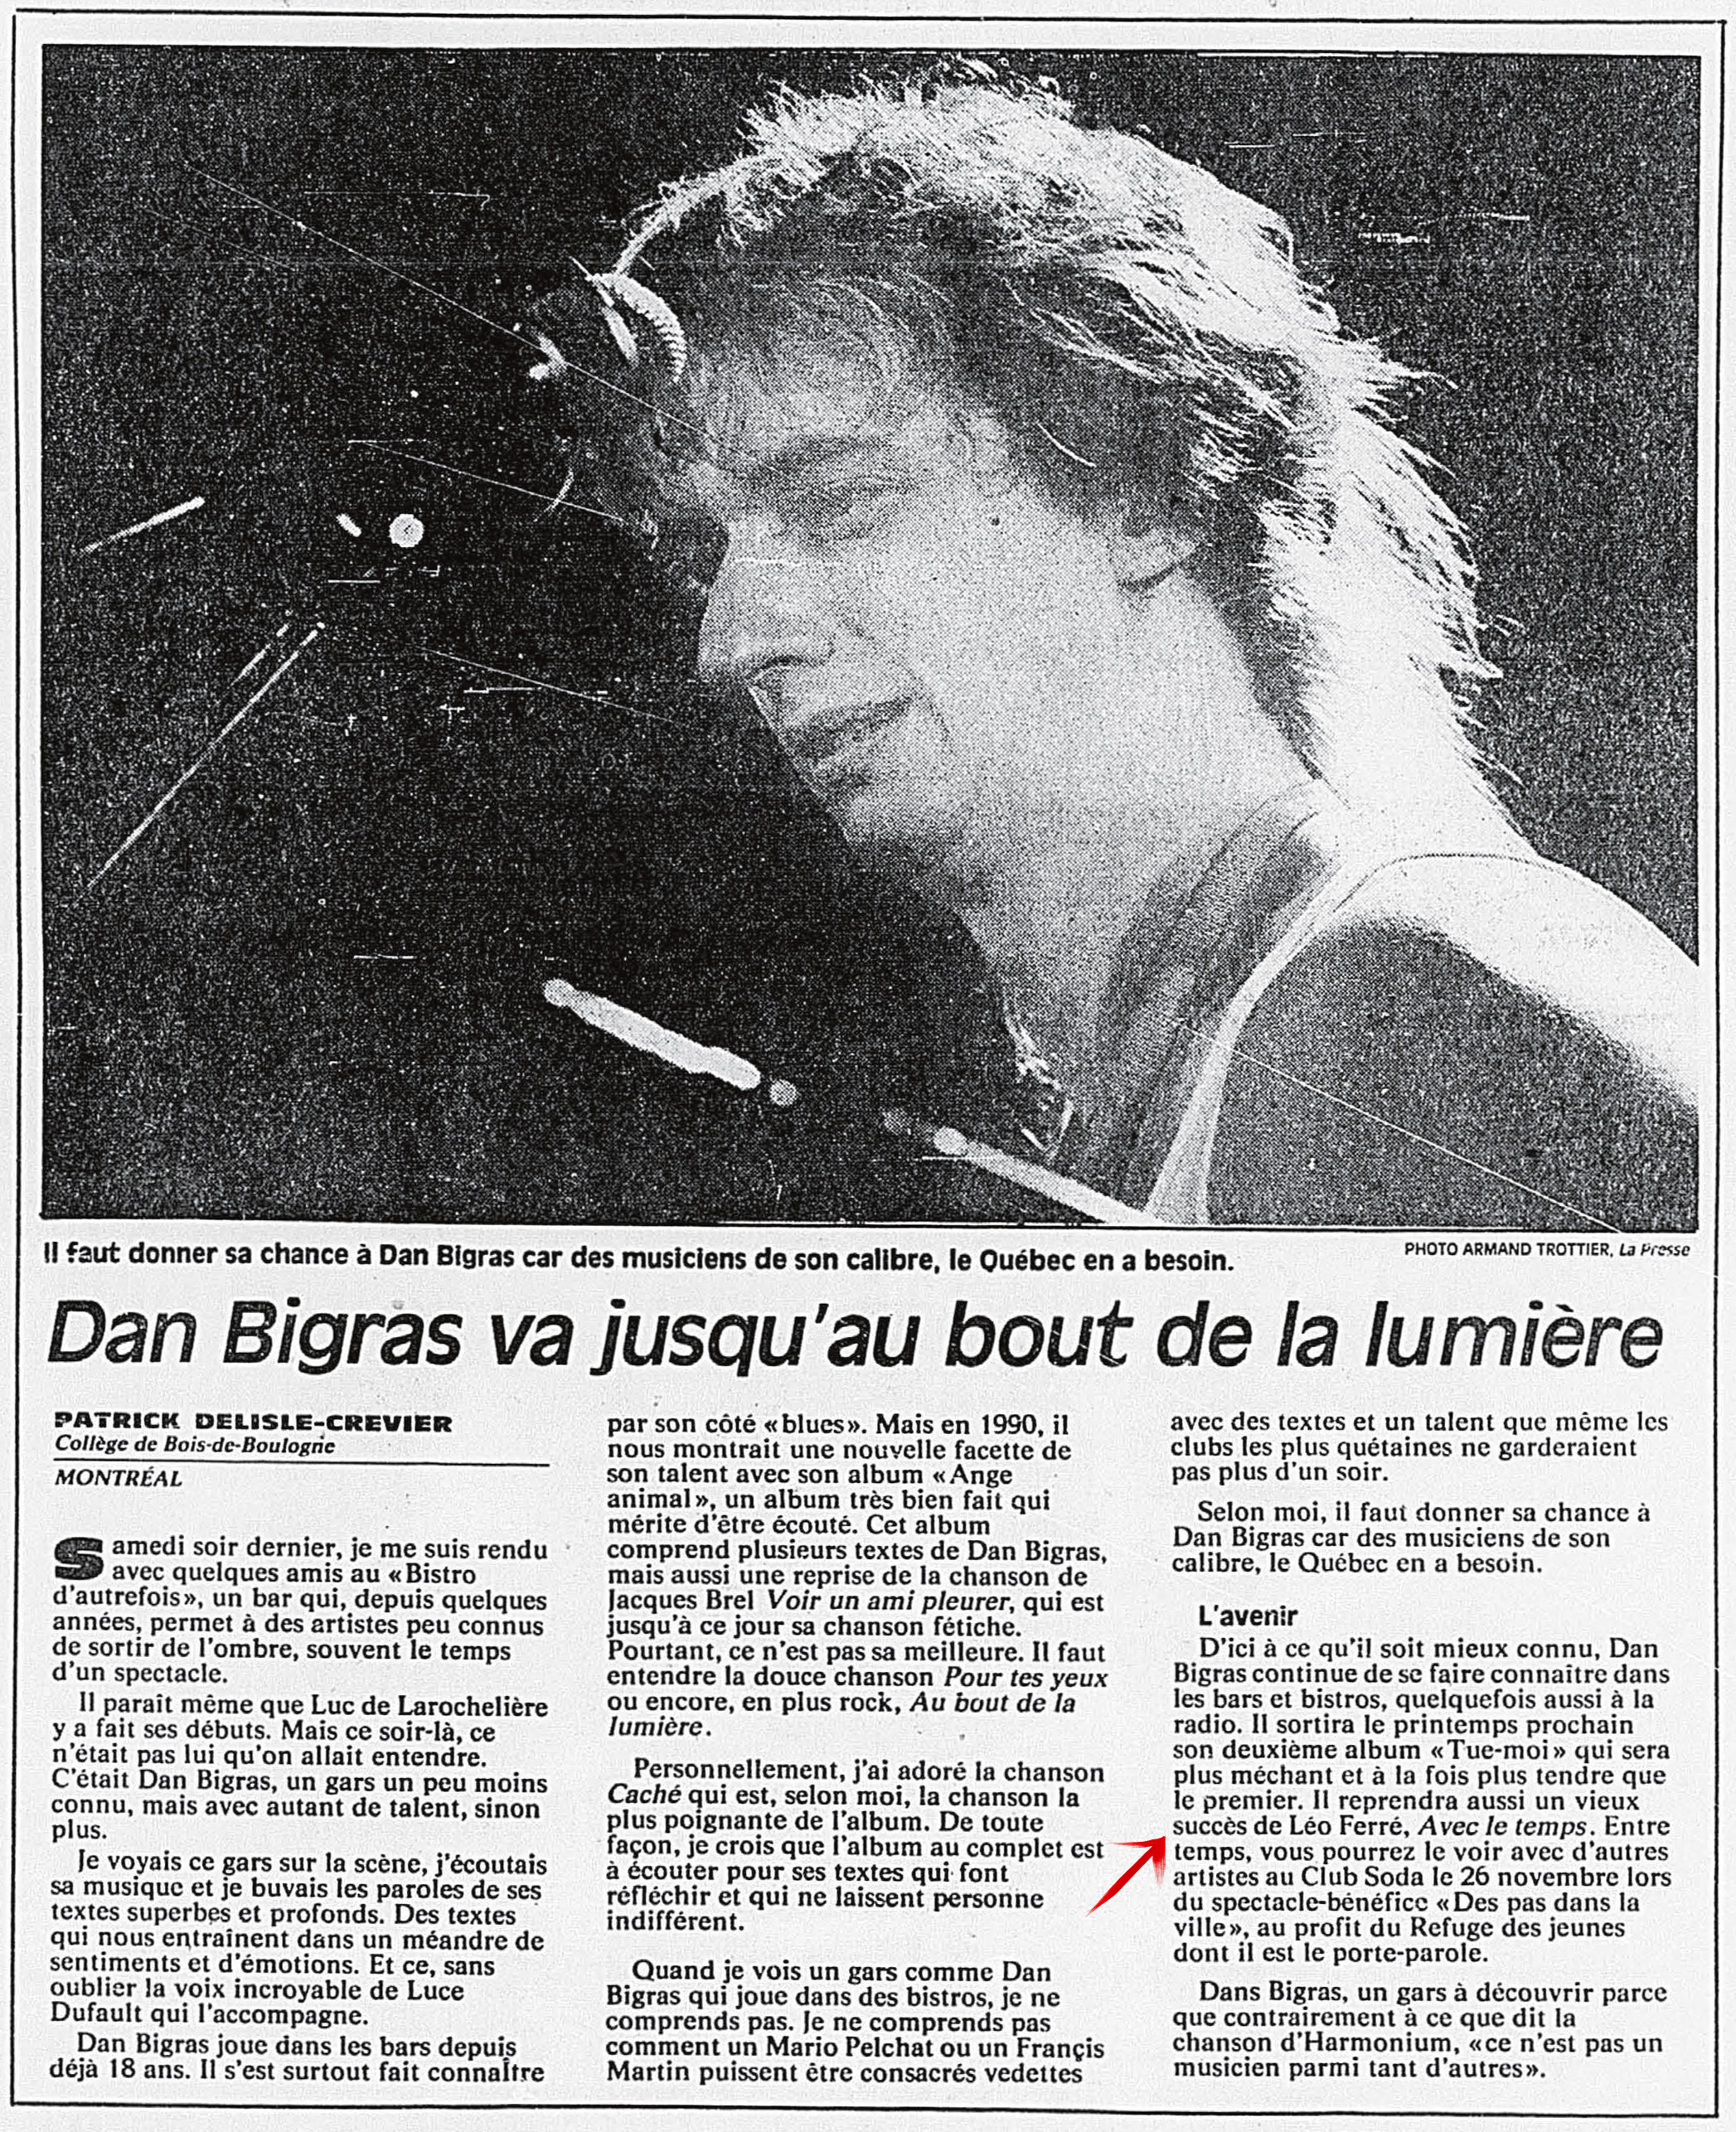 Léo Ferré - La Presse, 10 novembre 1991, Cahier A